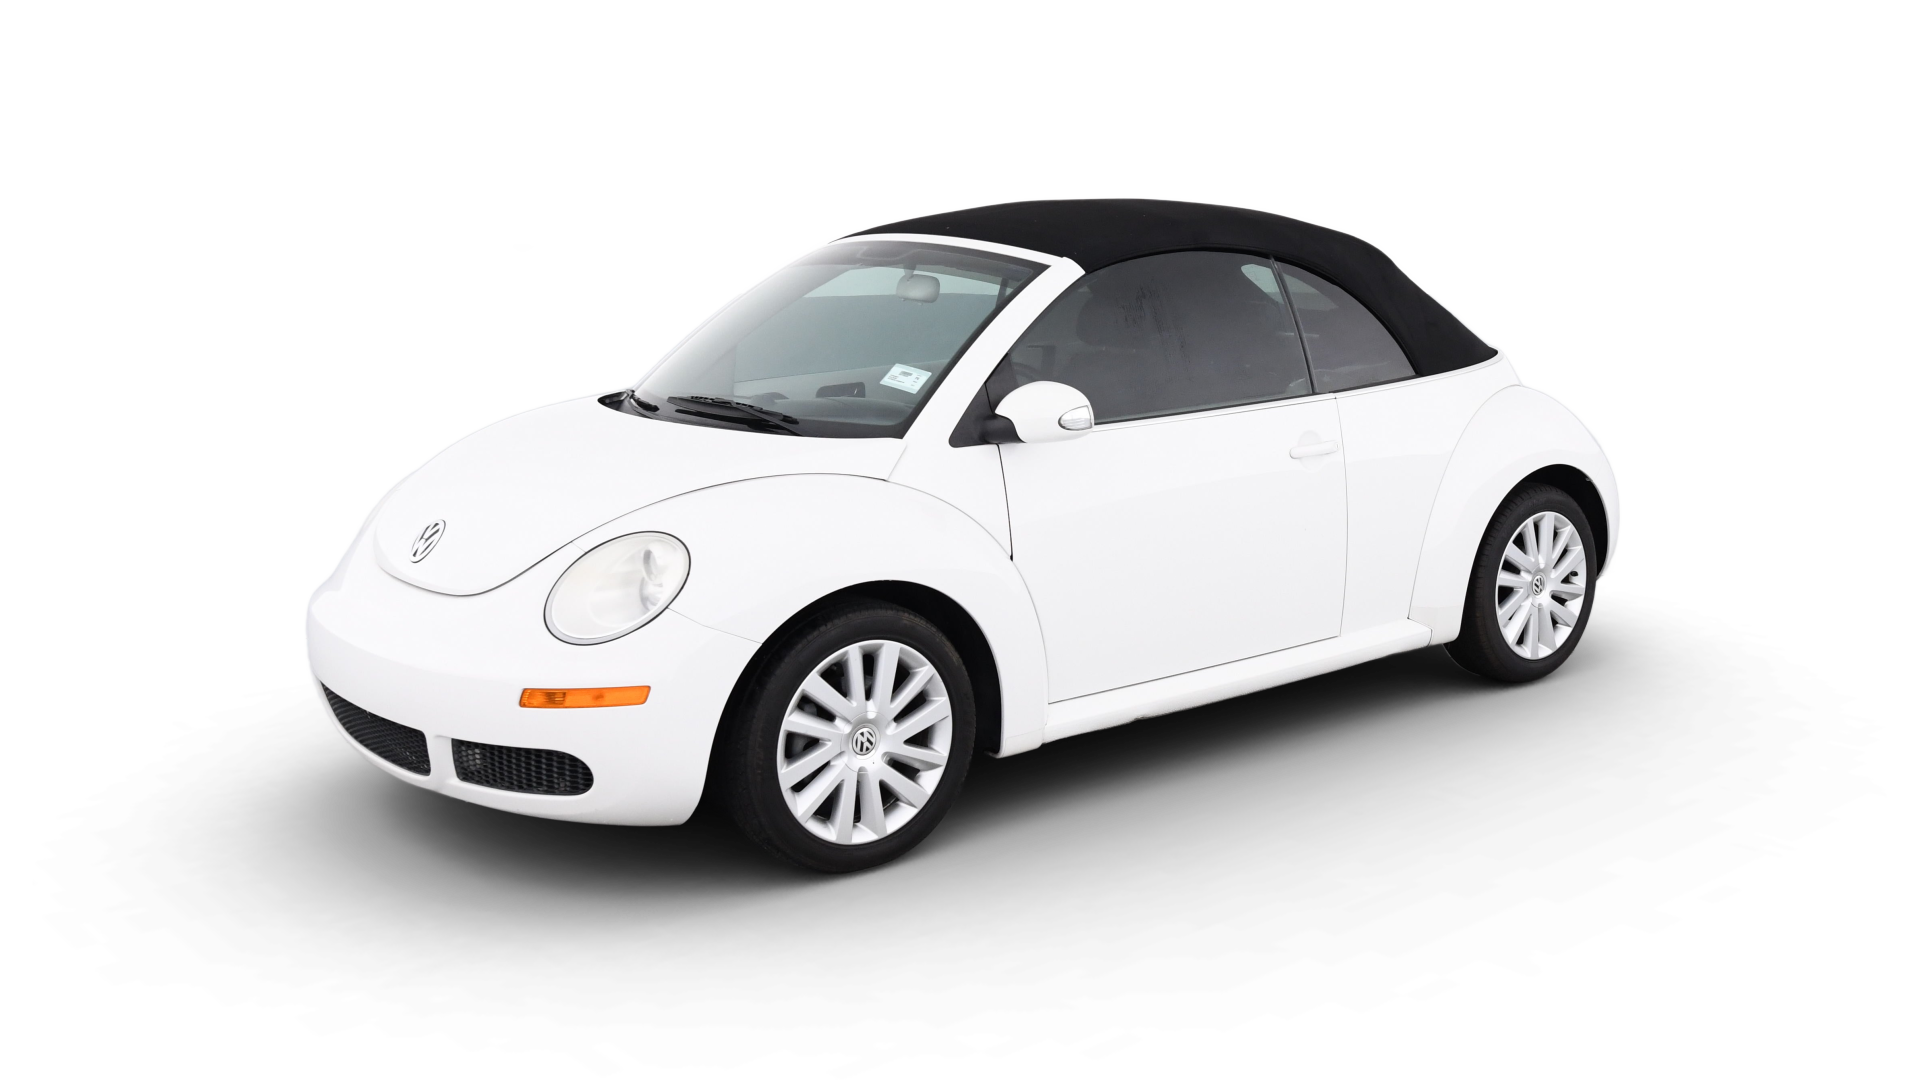 Used 2010 Volkswagen New Beetle | Carvana